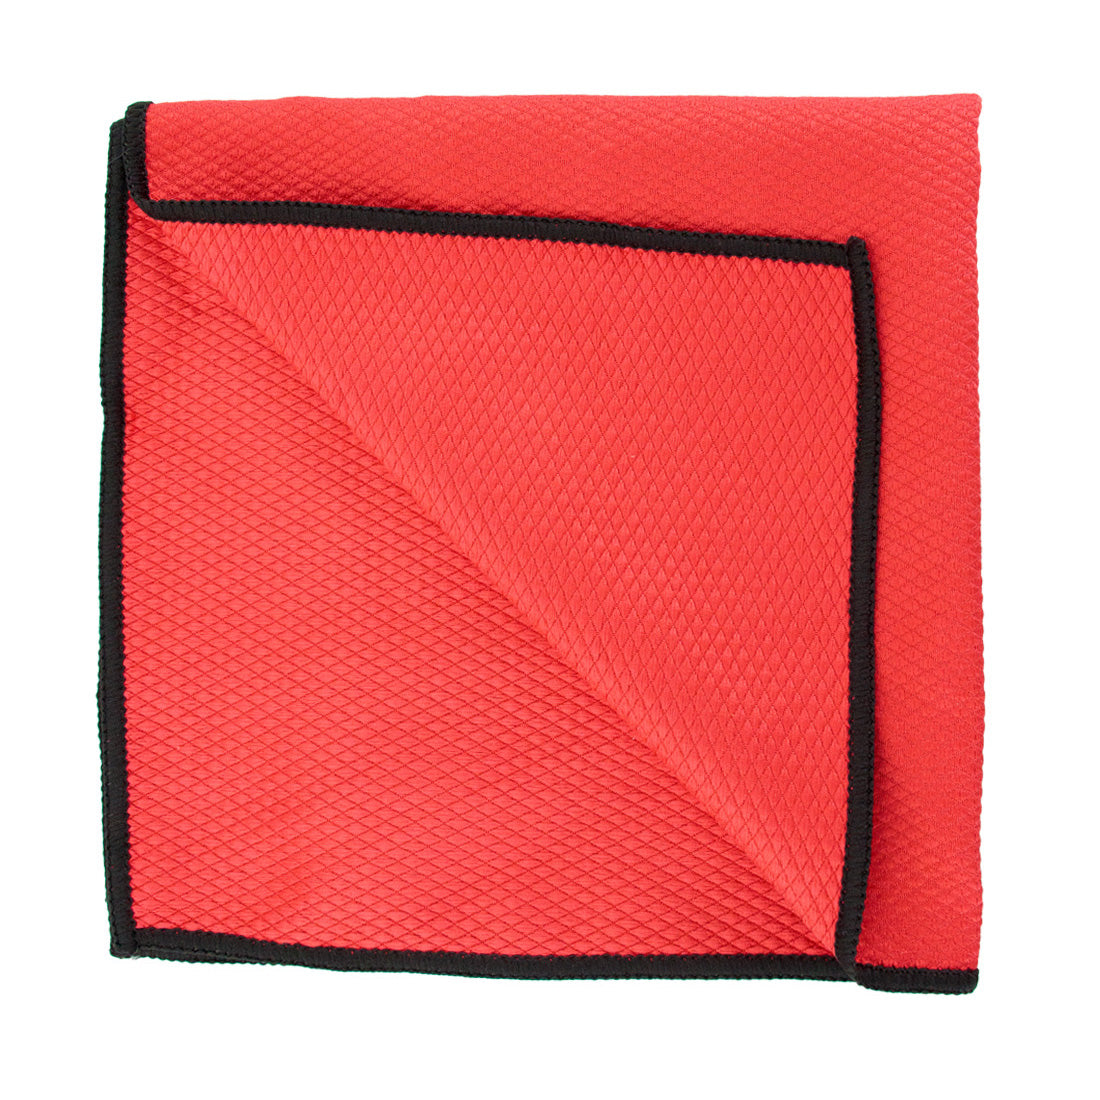 XERO Fish Scale Towel, Microfiber Cloths